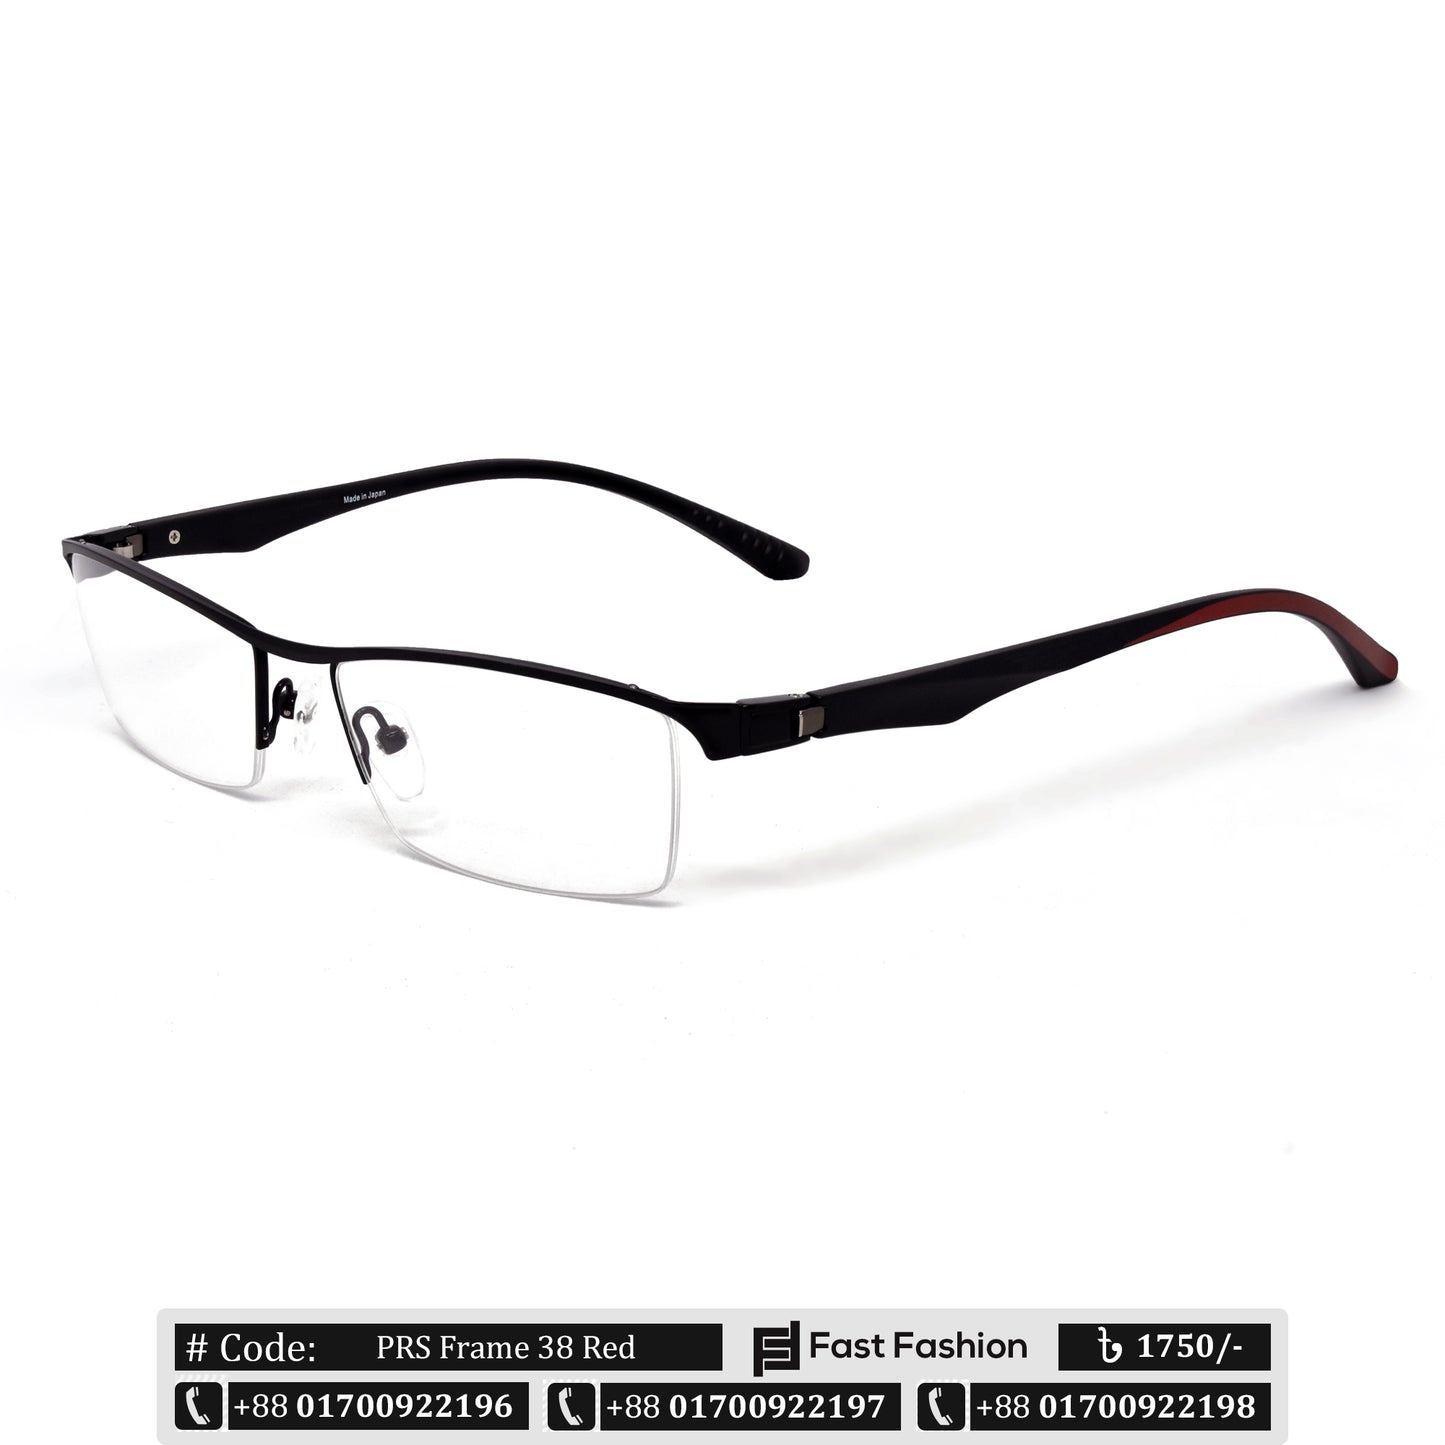 Trendy Modern Stylish New PRS Optic Frame | PRS Frame 38 | Premium Quality